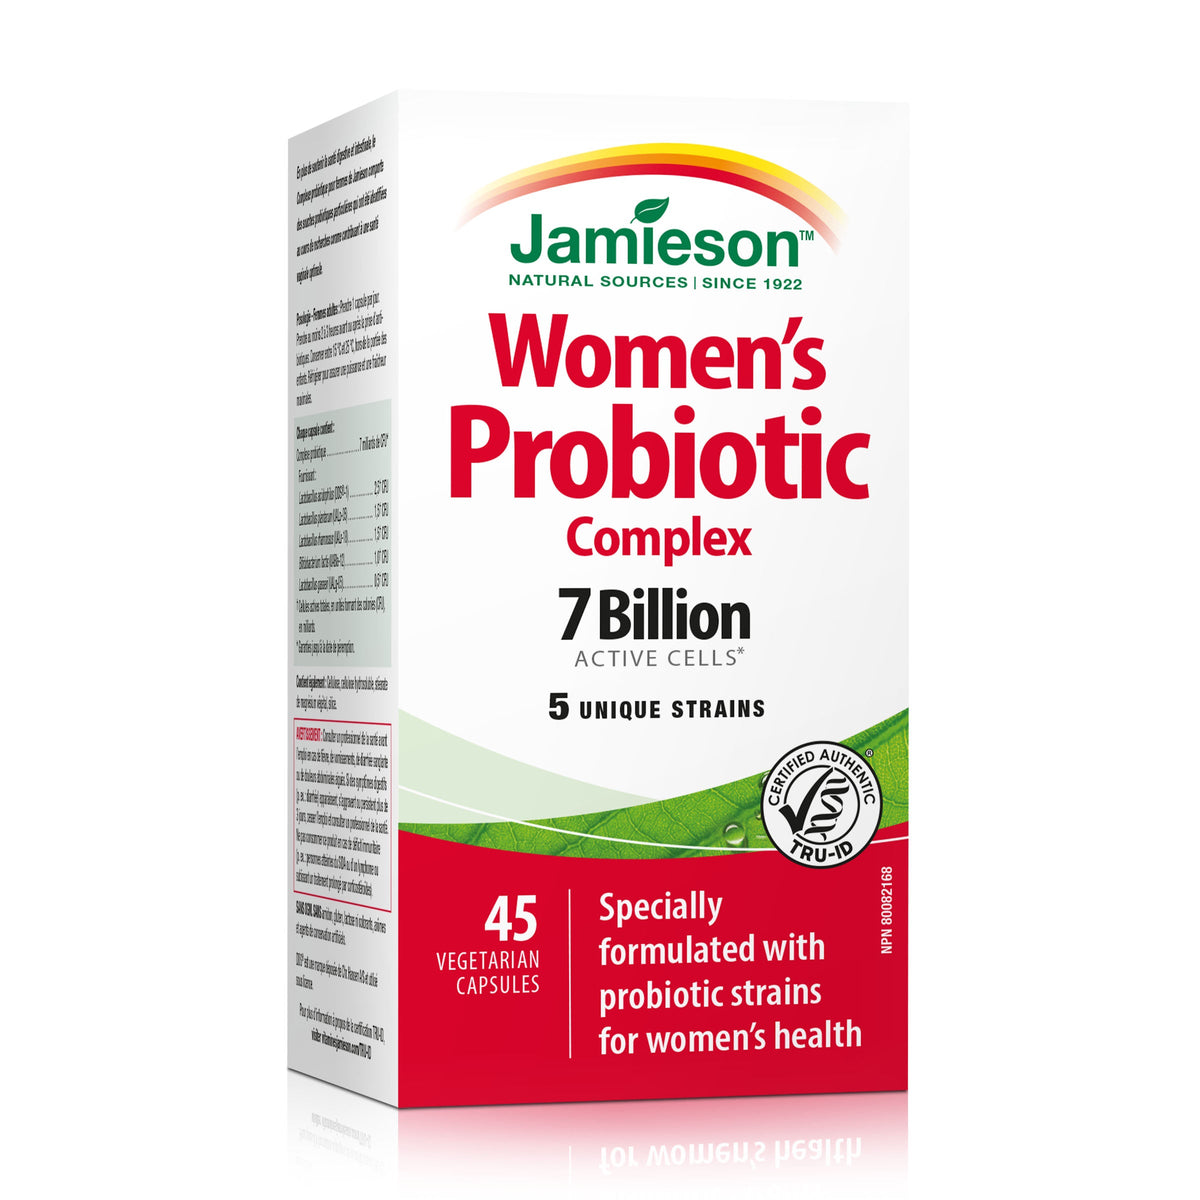 Jamieson Probiotic Complex for Women